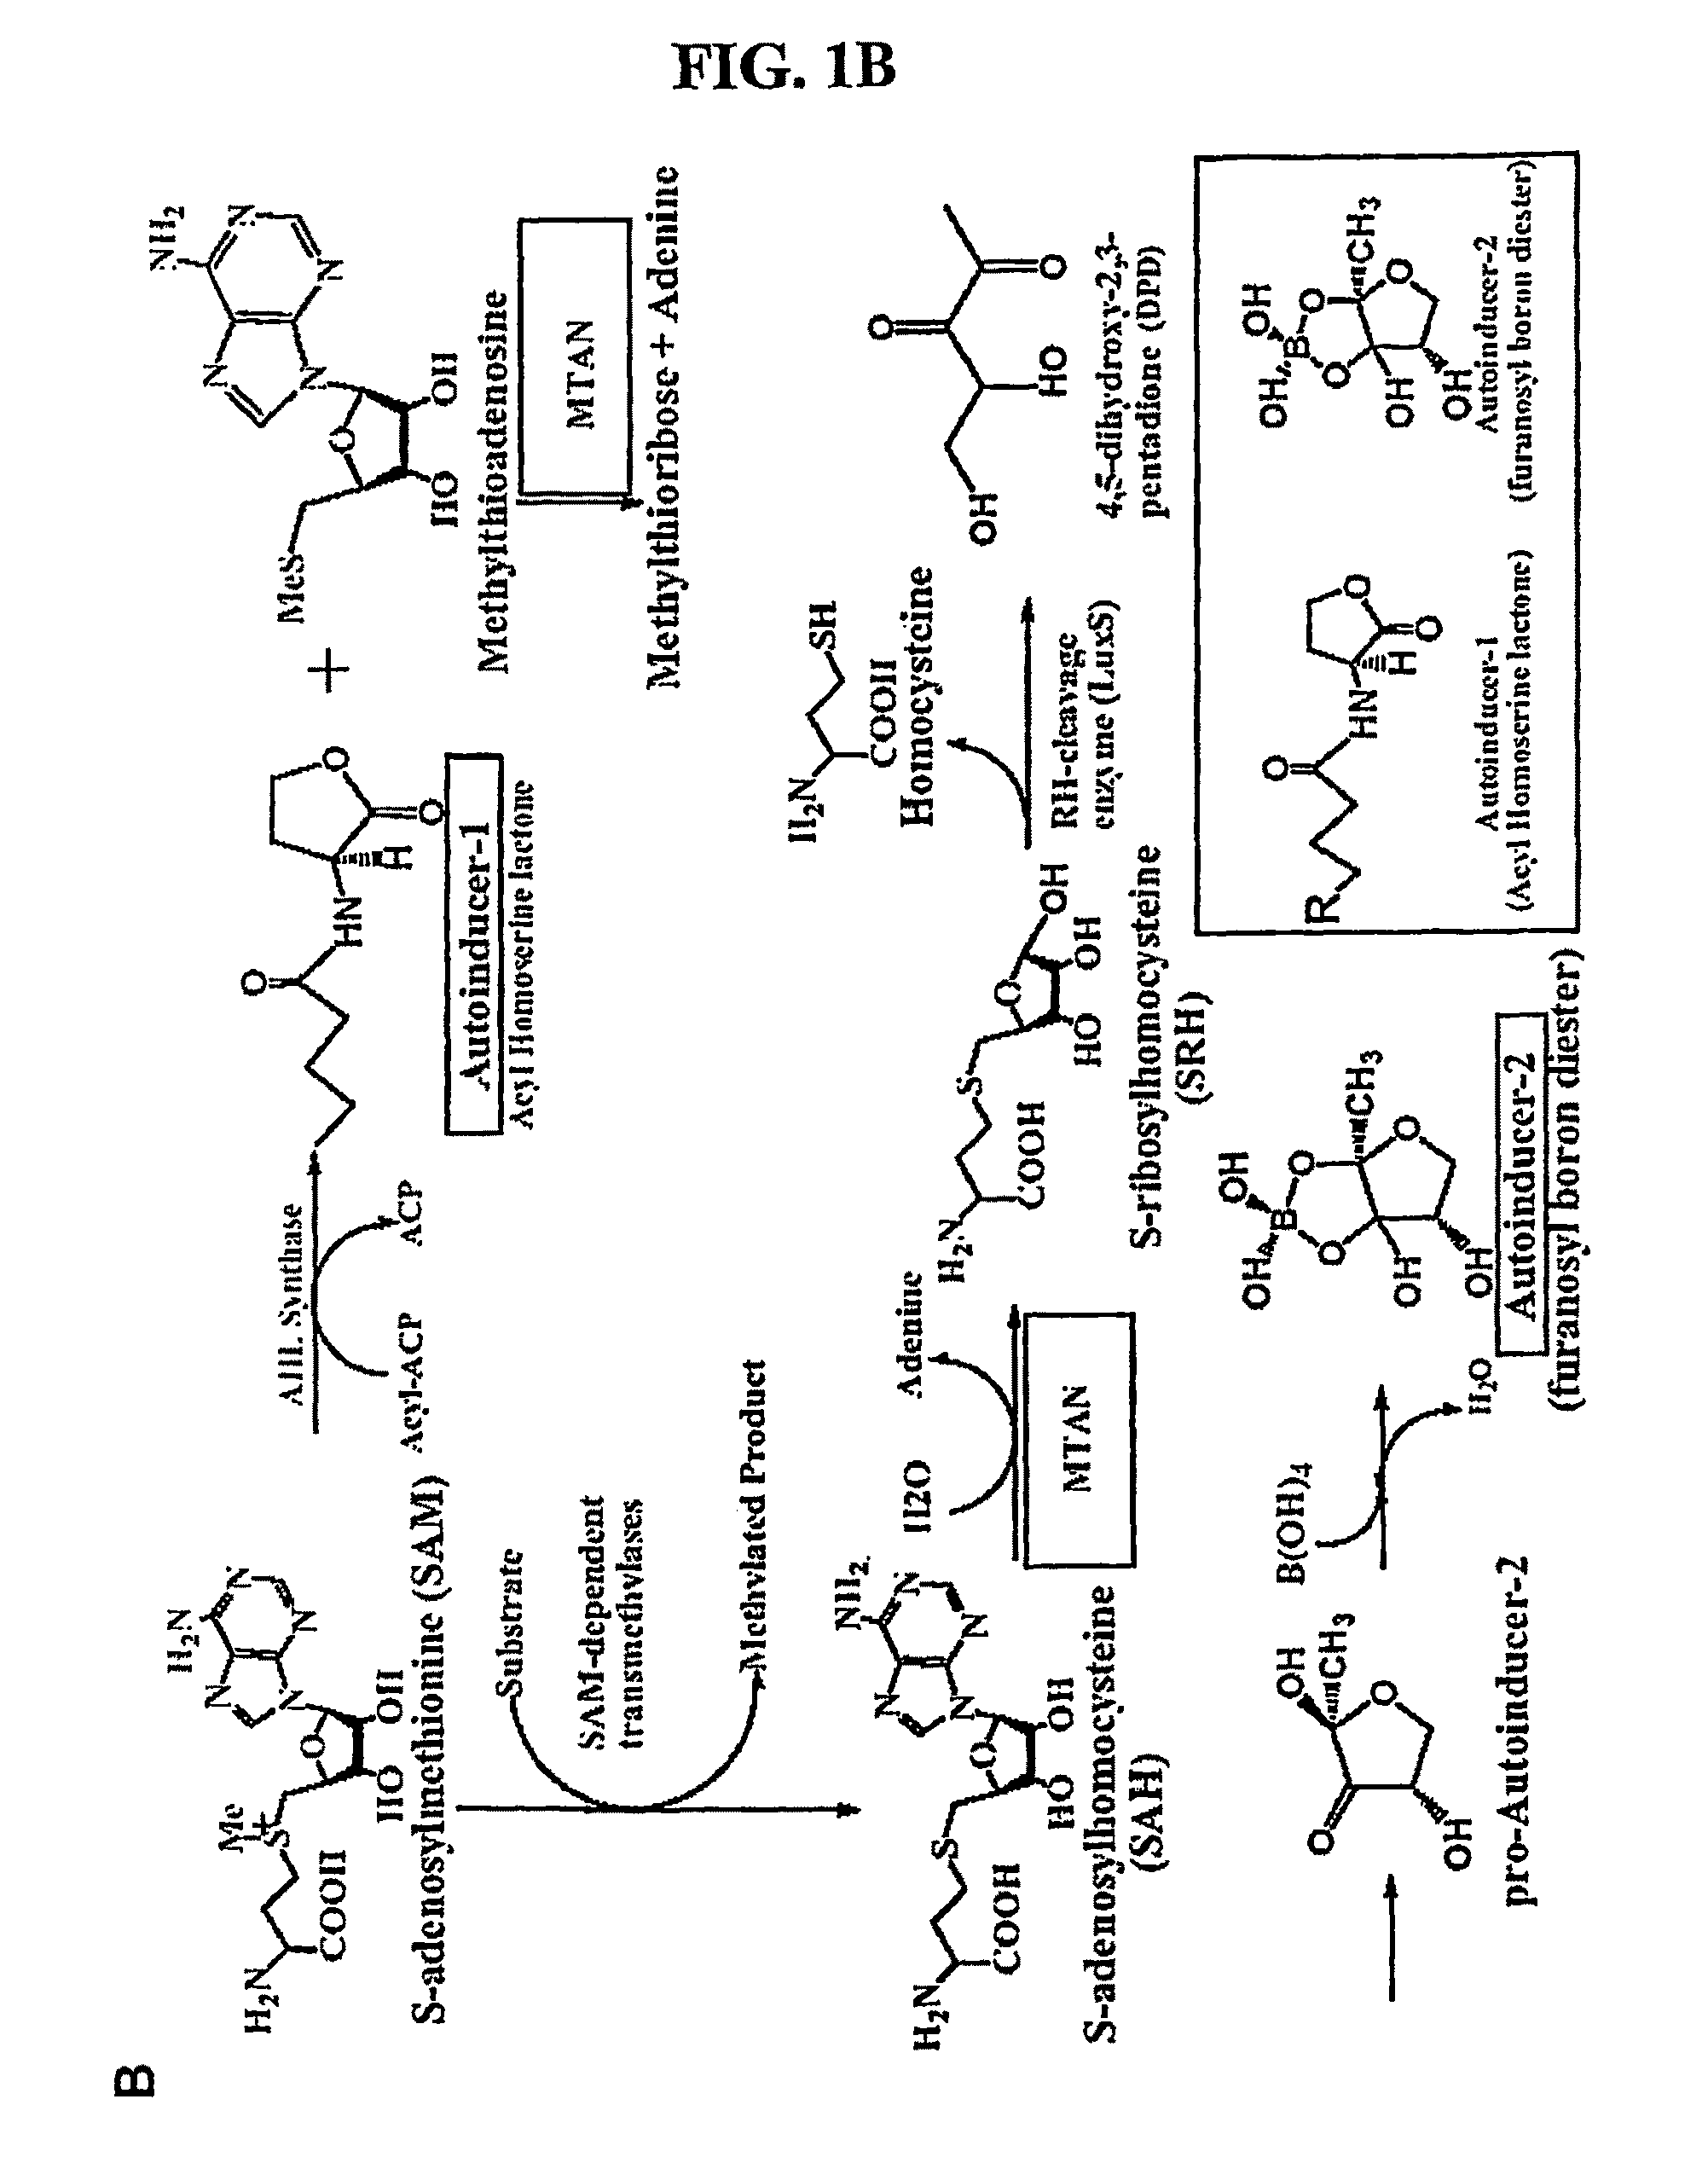 Transition state structure of 5'-methylthioadenosine/s-adenosylhomocysteine nucleosidases